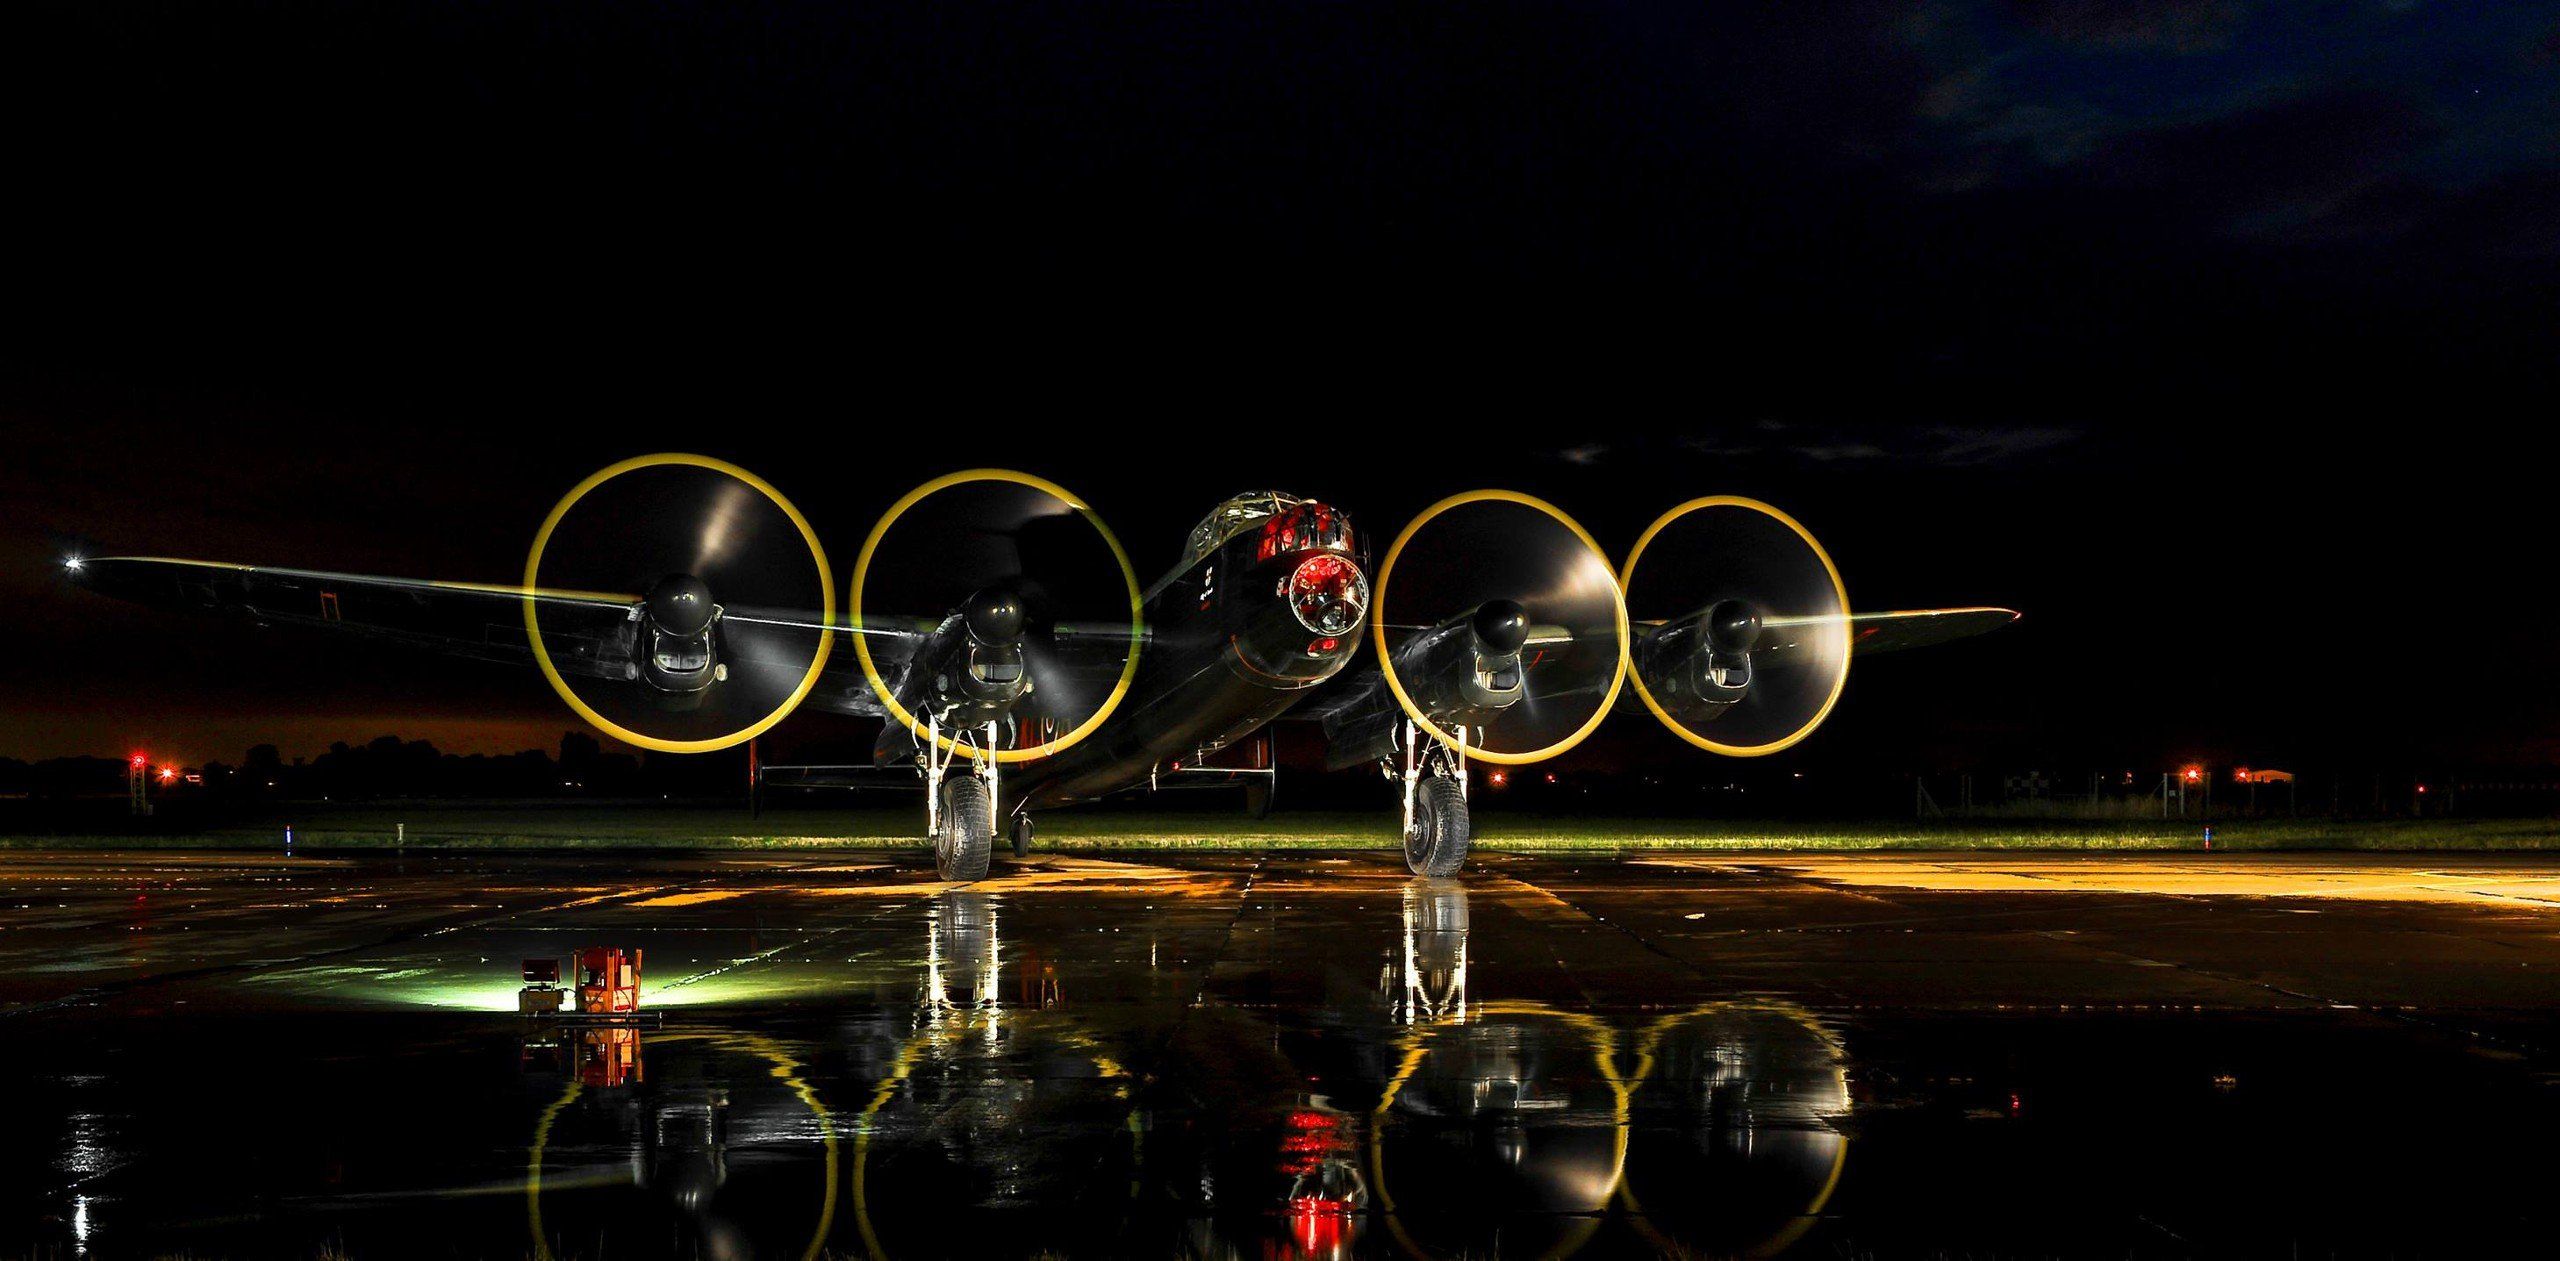 Avro Lancaster, Planes, Bomber, Reflection, Runway, Night